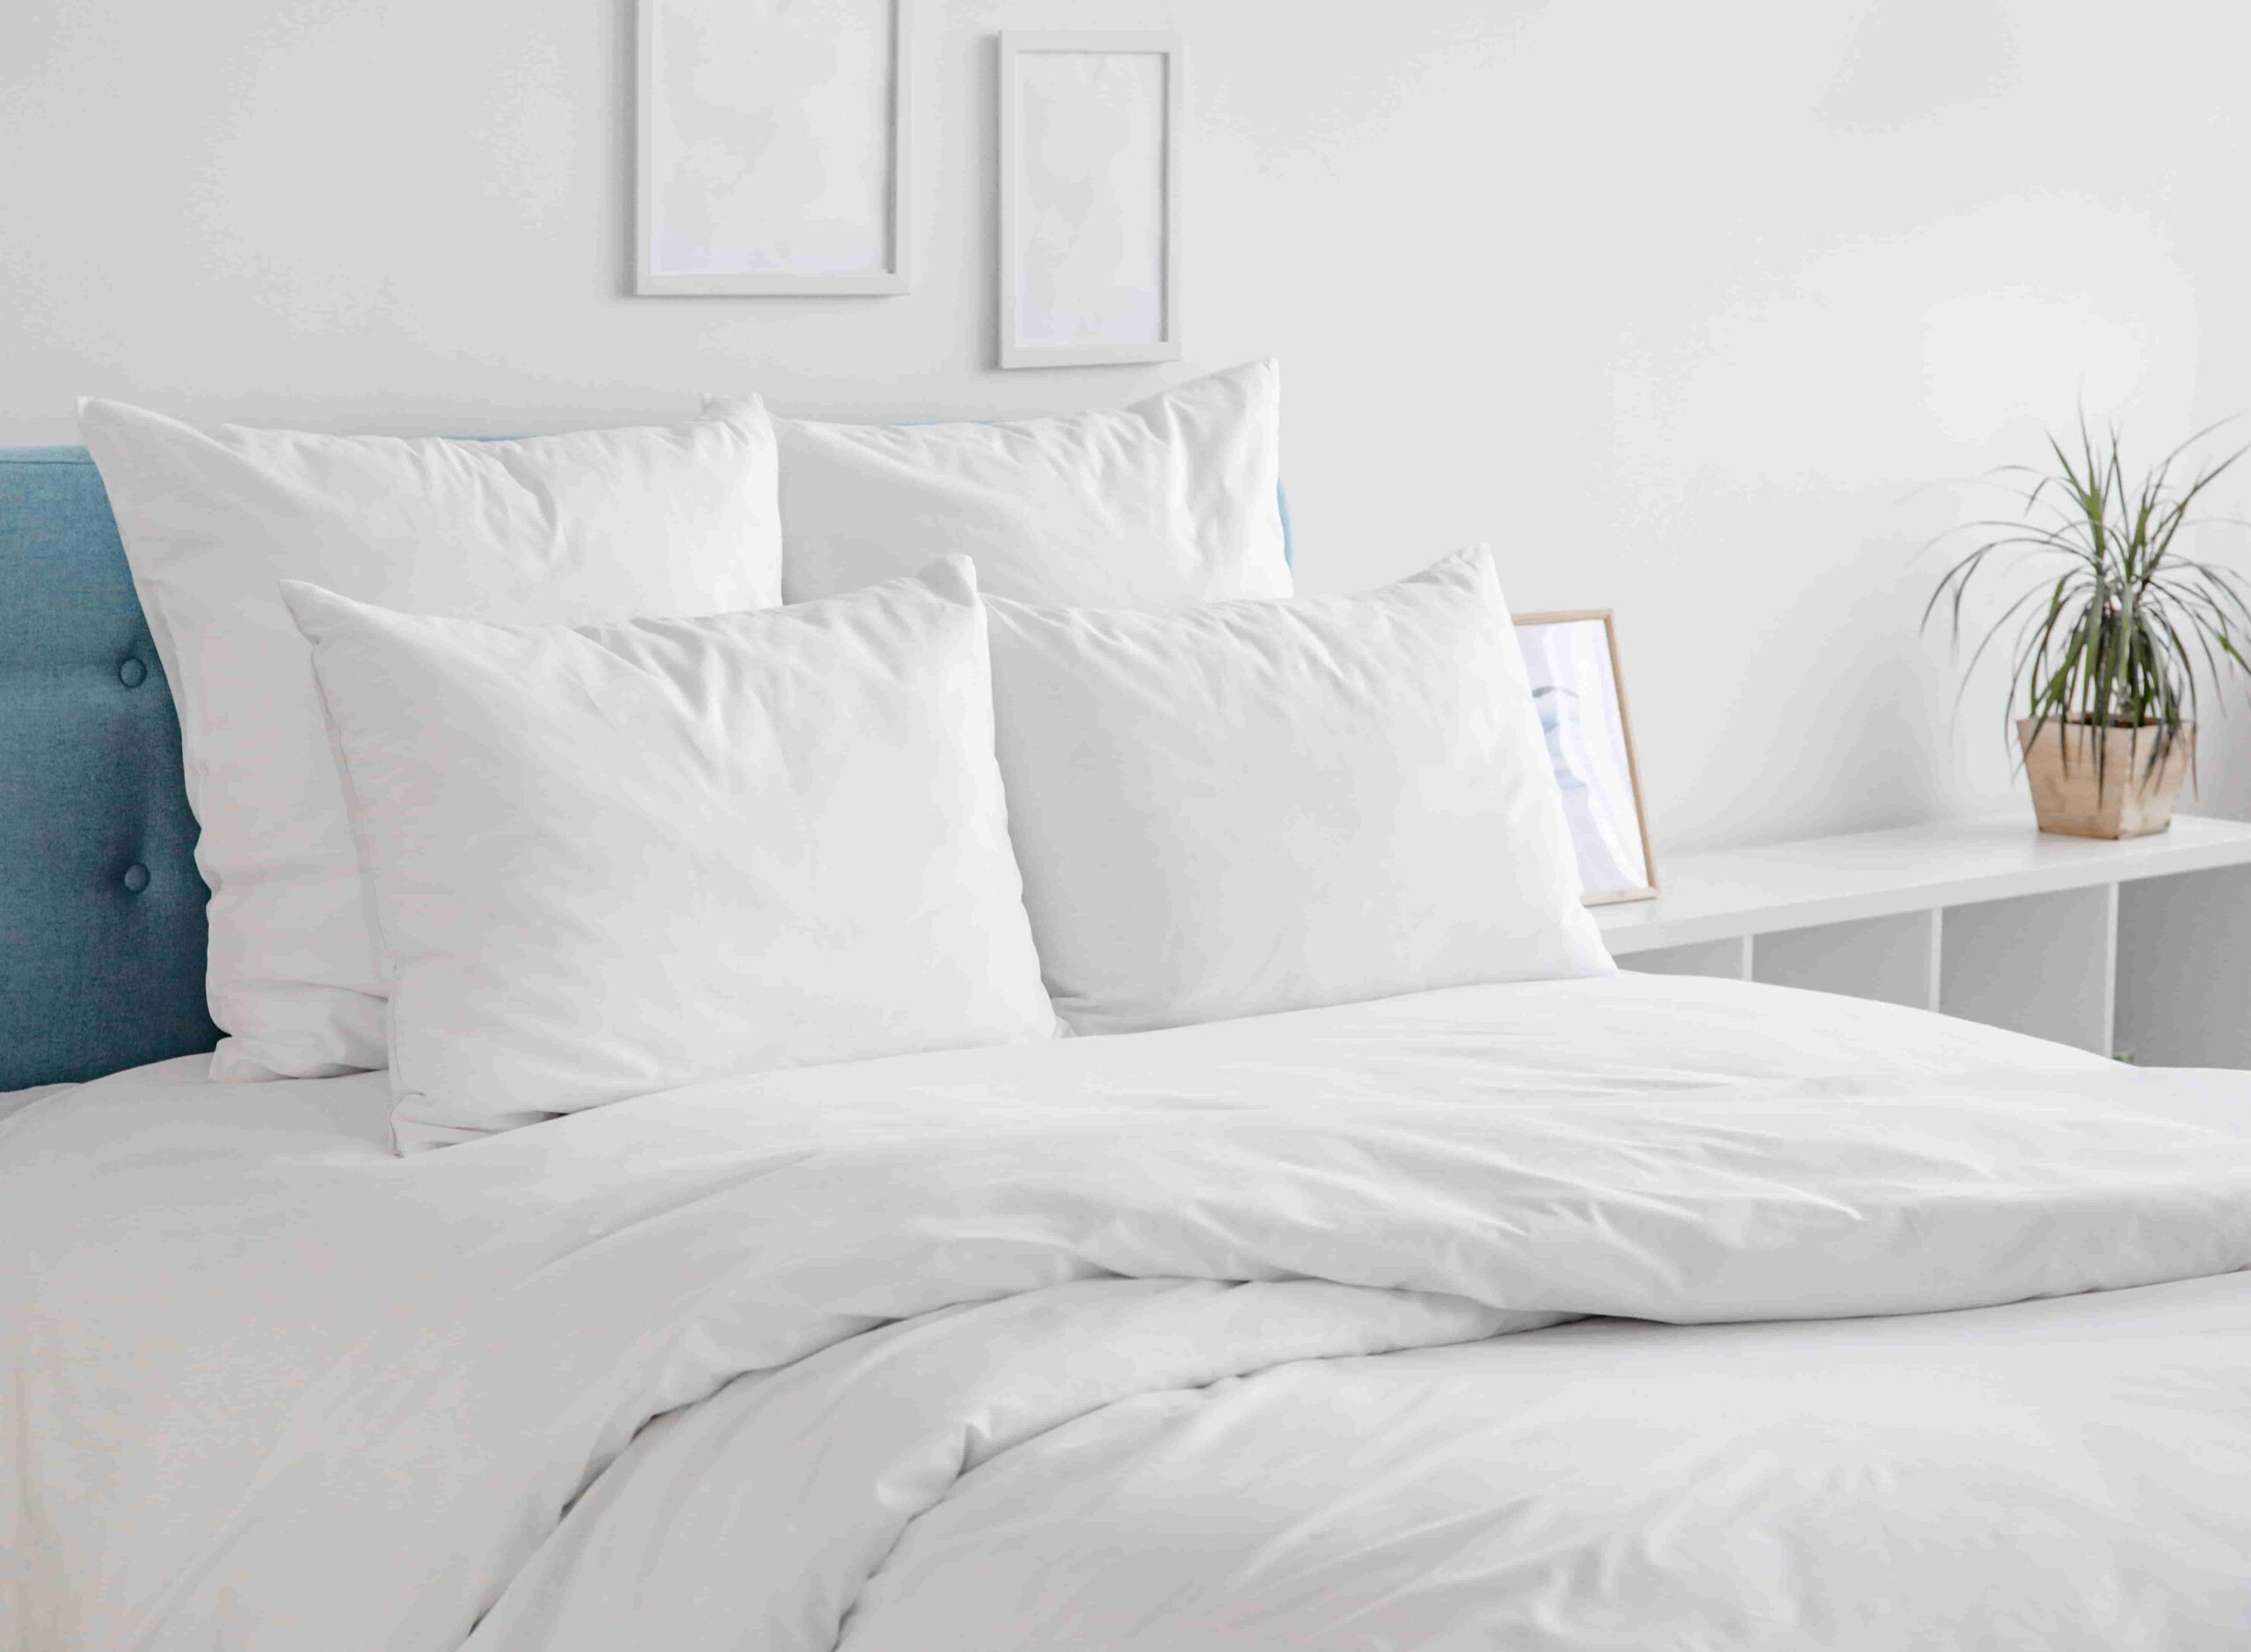 Surprising Benefits Of White Bedding